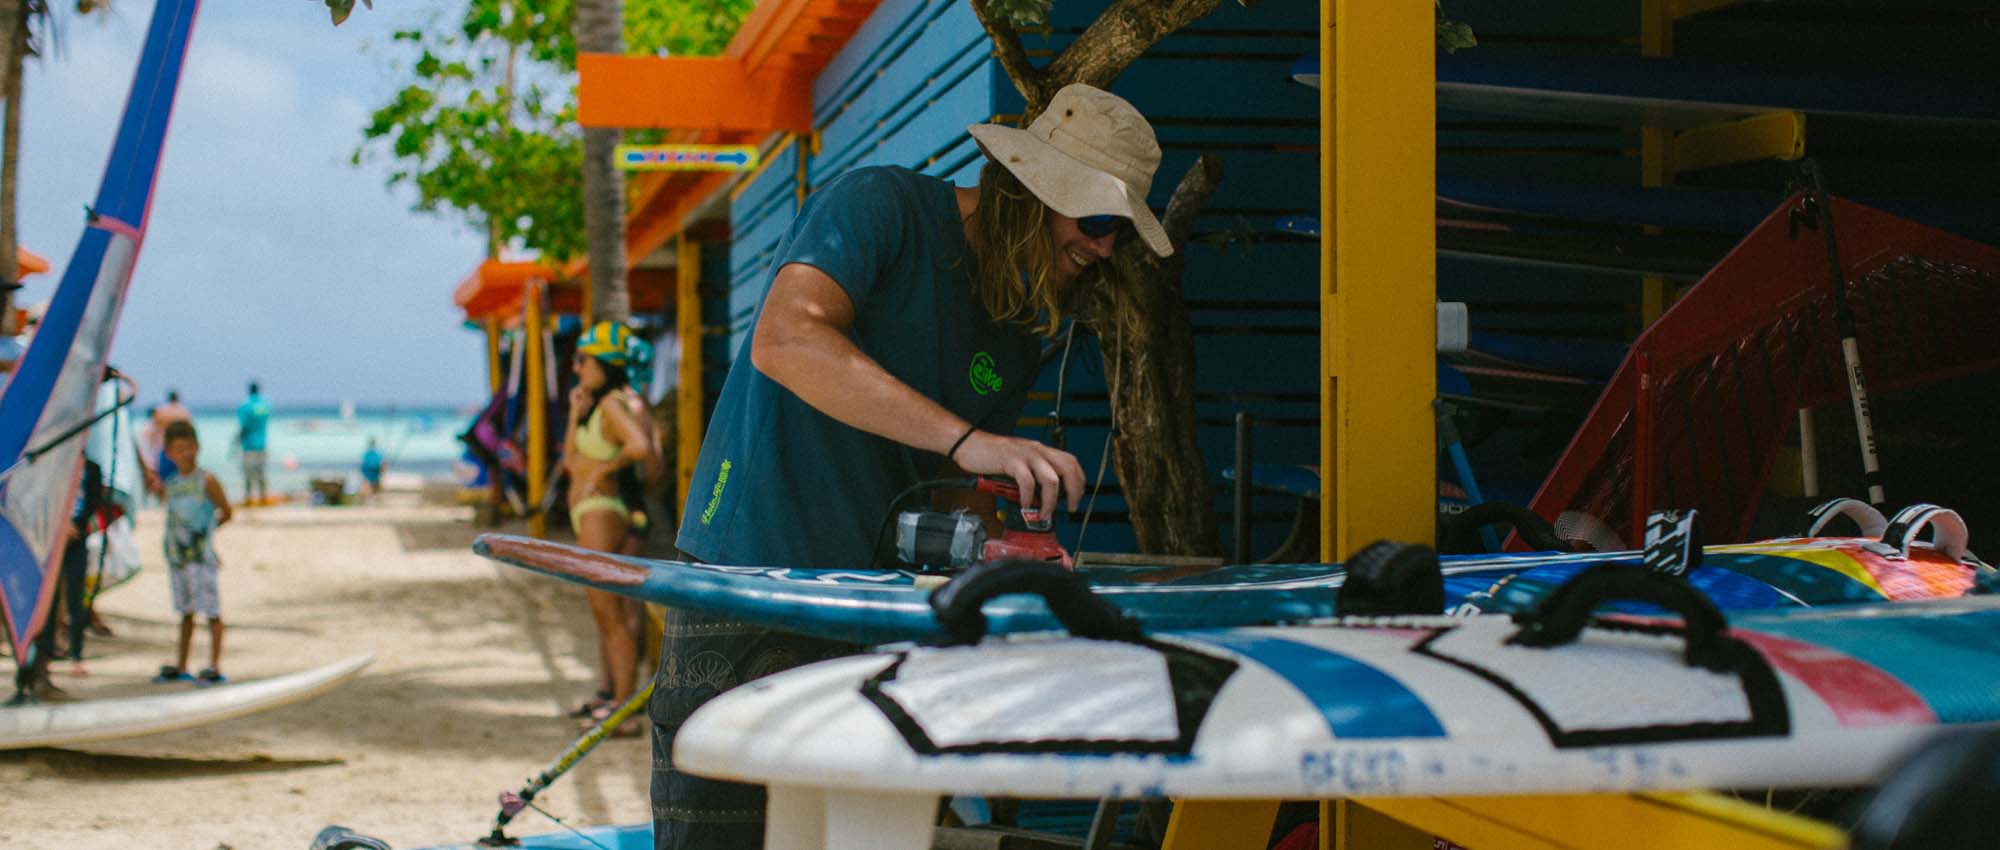 Man sanding surfboard in beach hut